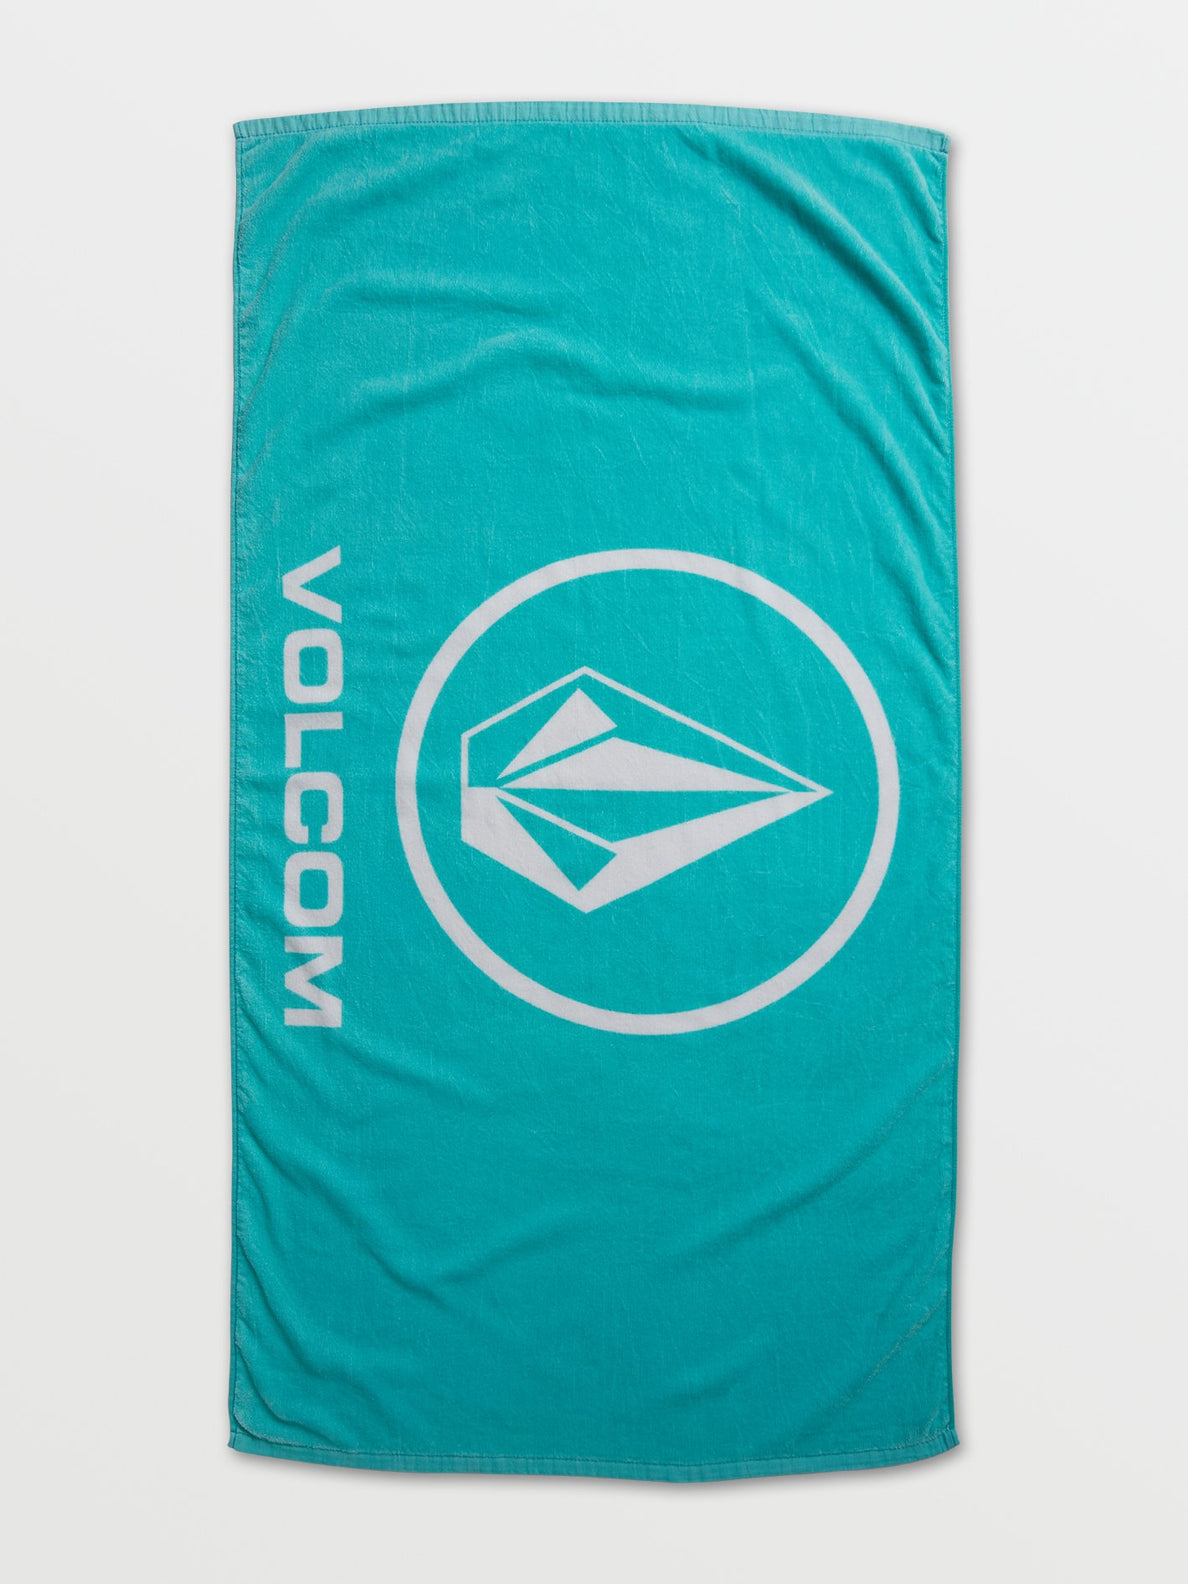 Volcom Rider Towel - Turquoise